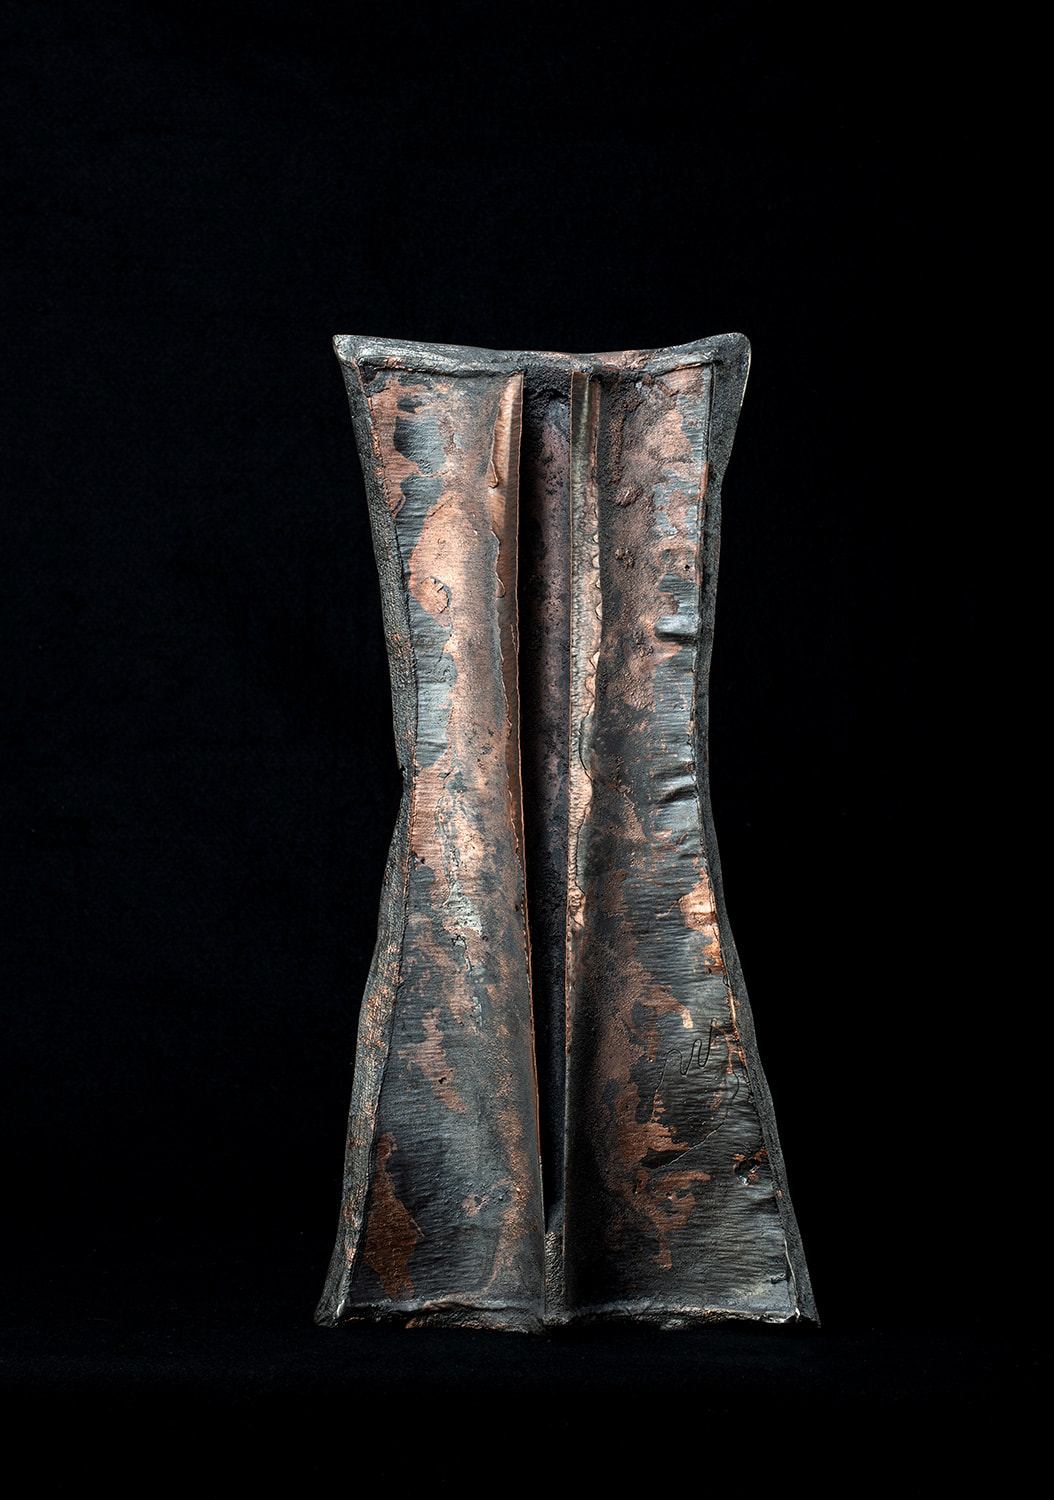 Innovation Award 2021: Jan Loney, Pittsburgh, PA, U.S. “Hourglass II” (10.2 x 17.7 x 5 cm) (26 x 7 x 2 in) Cast iron with copper - www.foldforming.org